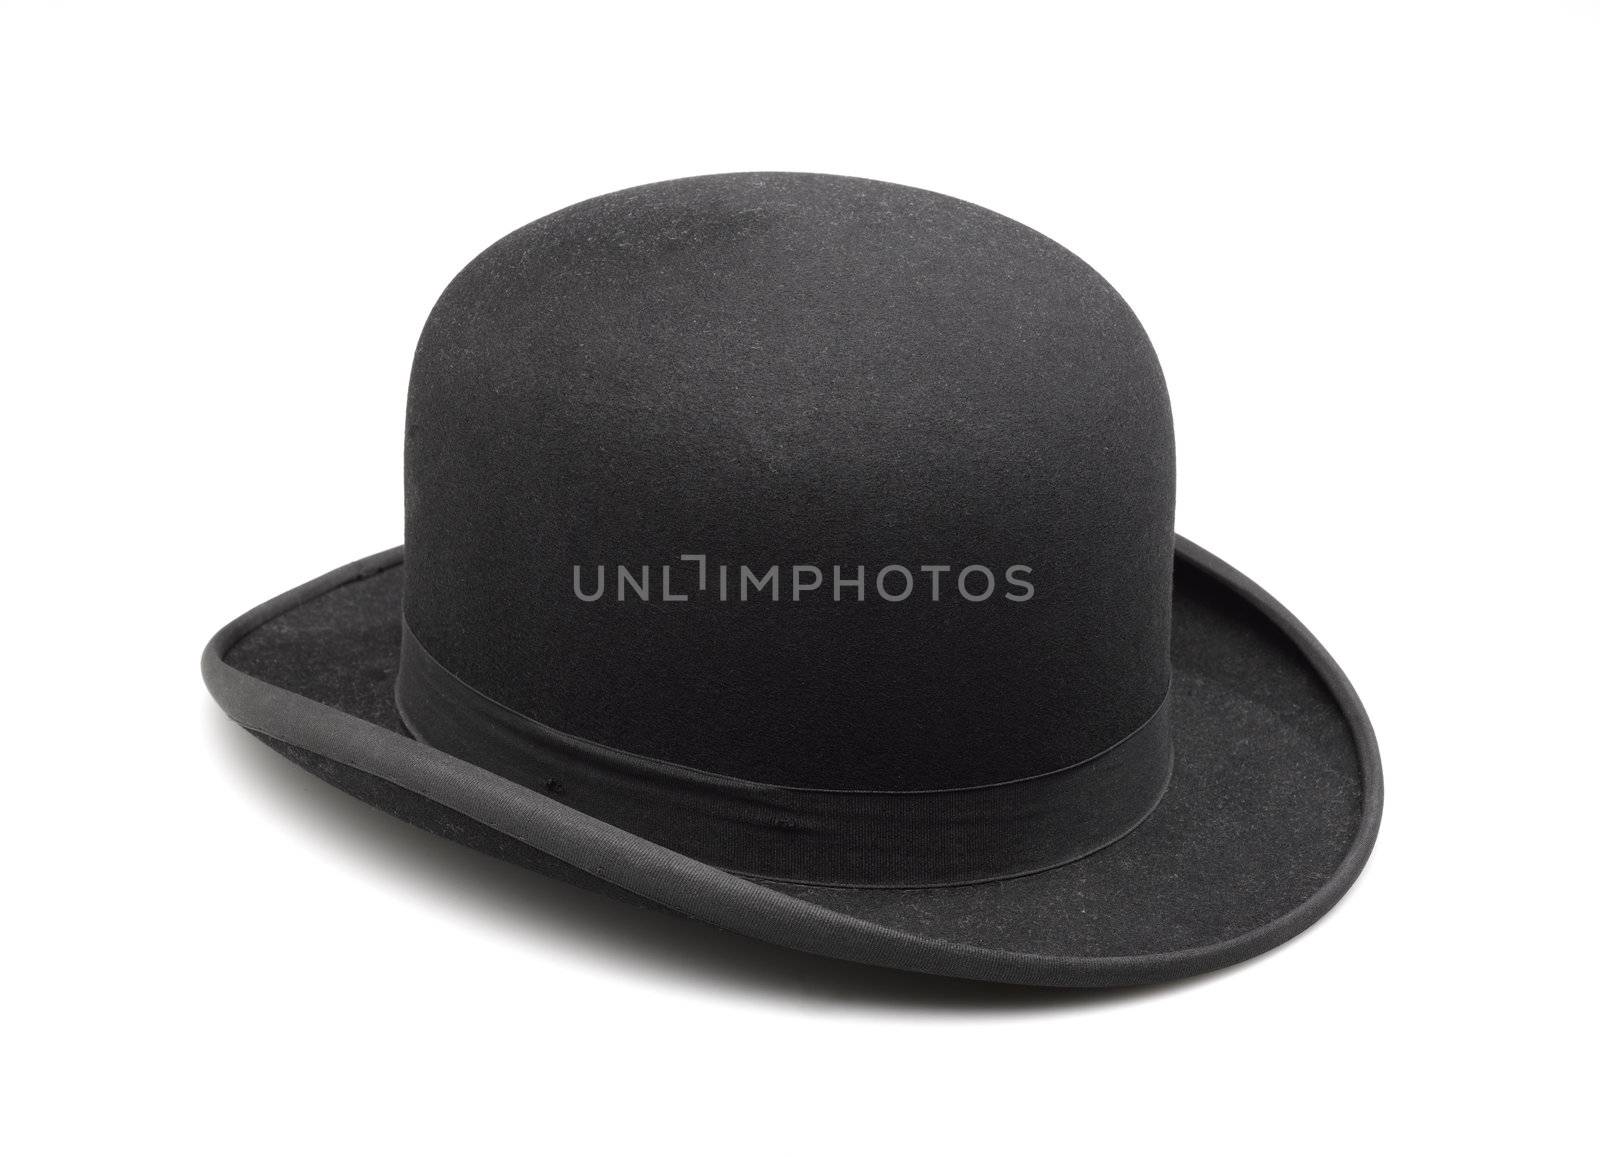 A stylish black bowler hat by pbombaert